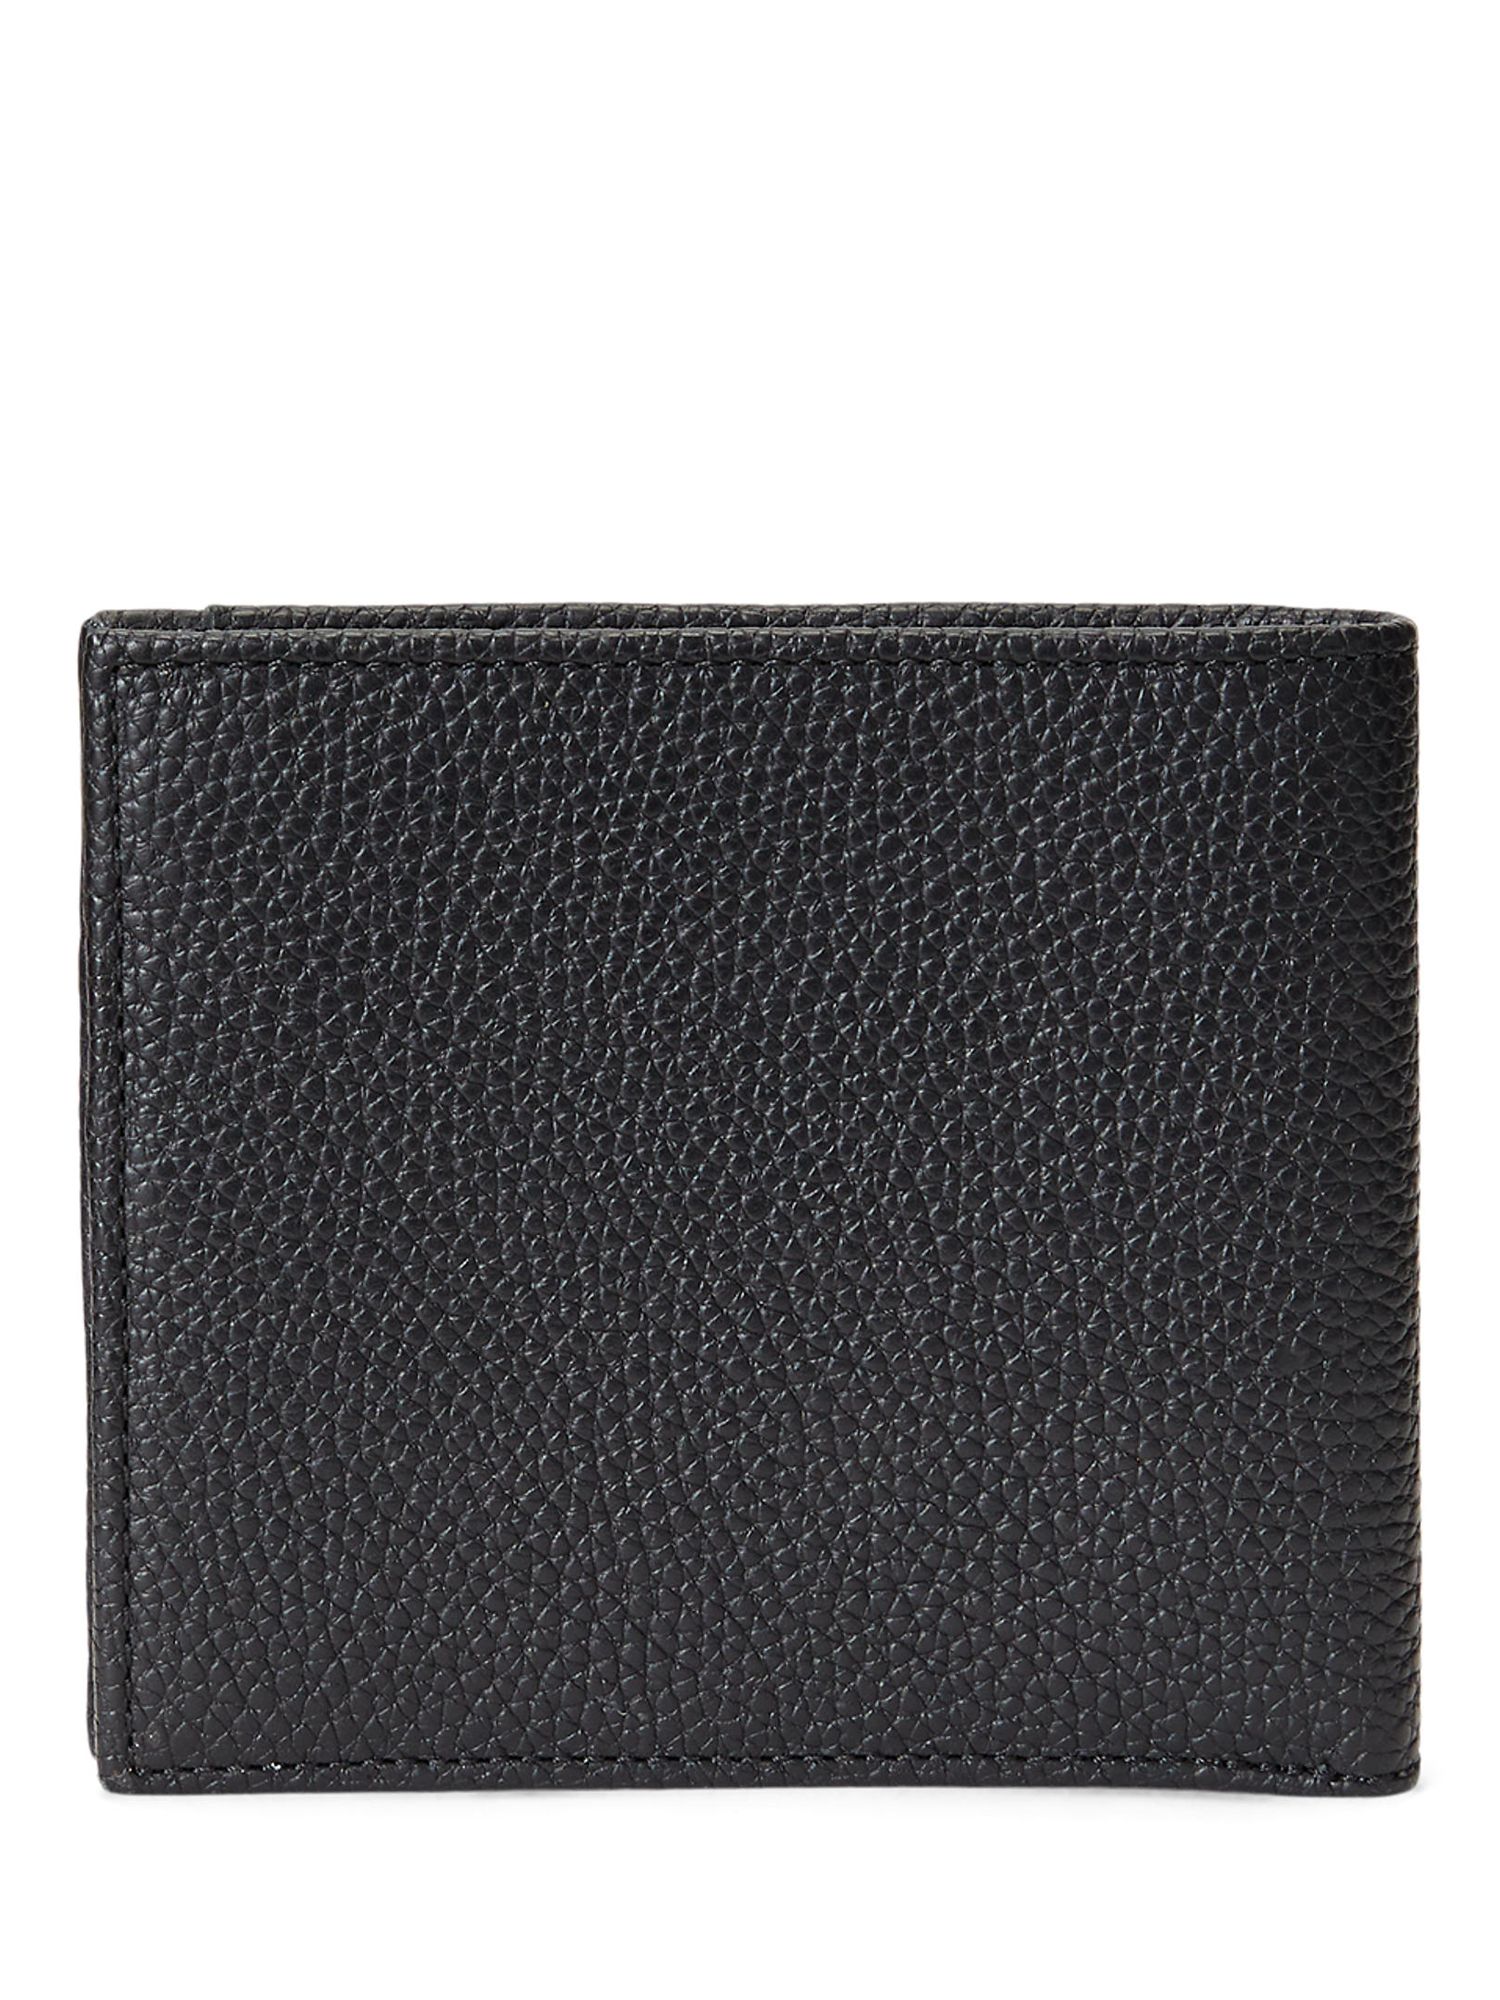 Polo Ralph Lauren Pebbled Leather Wallet, Black